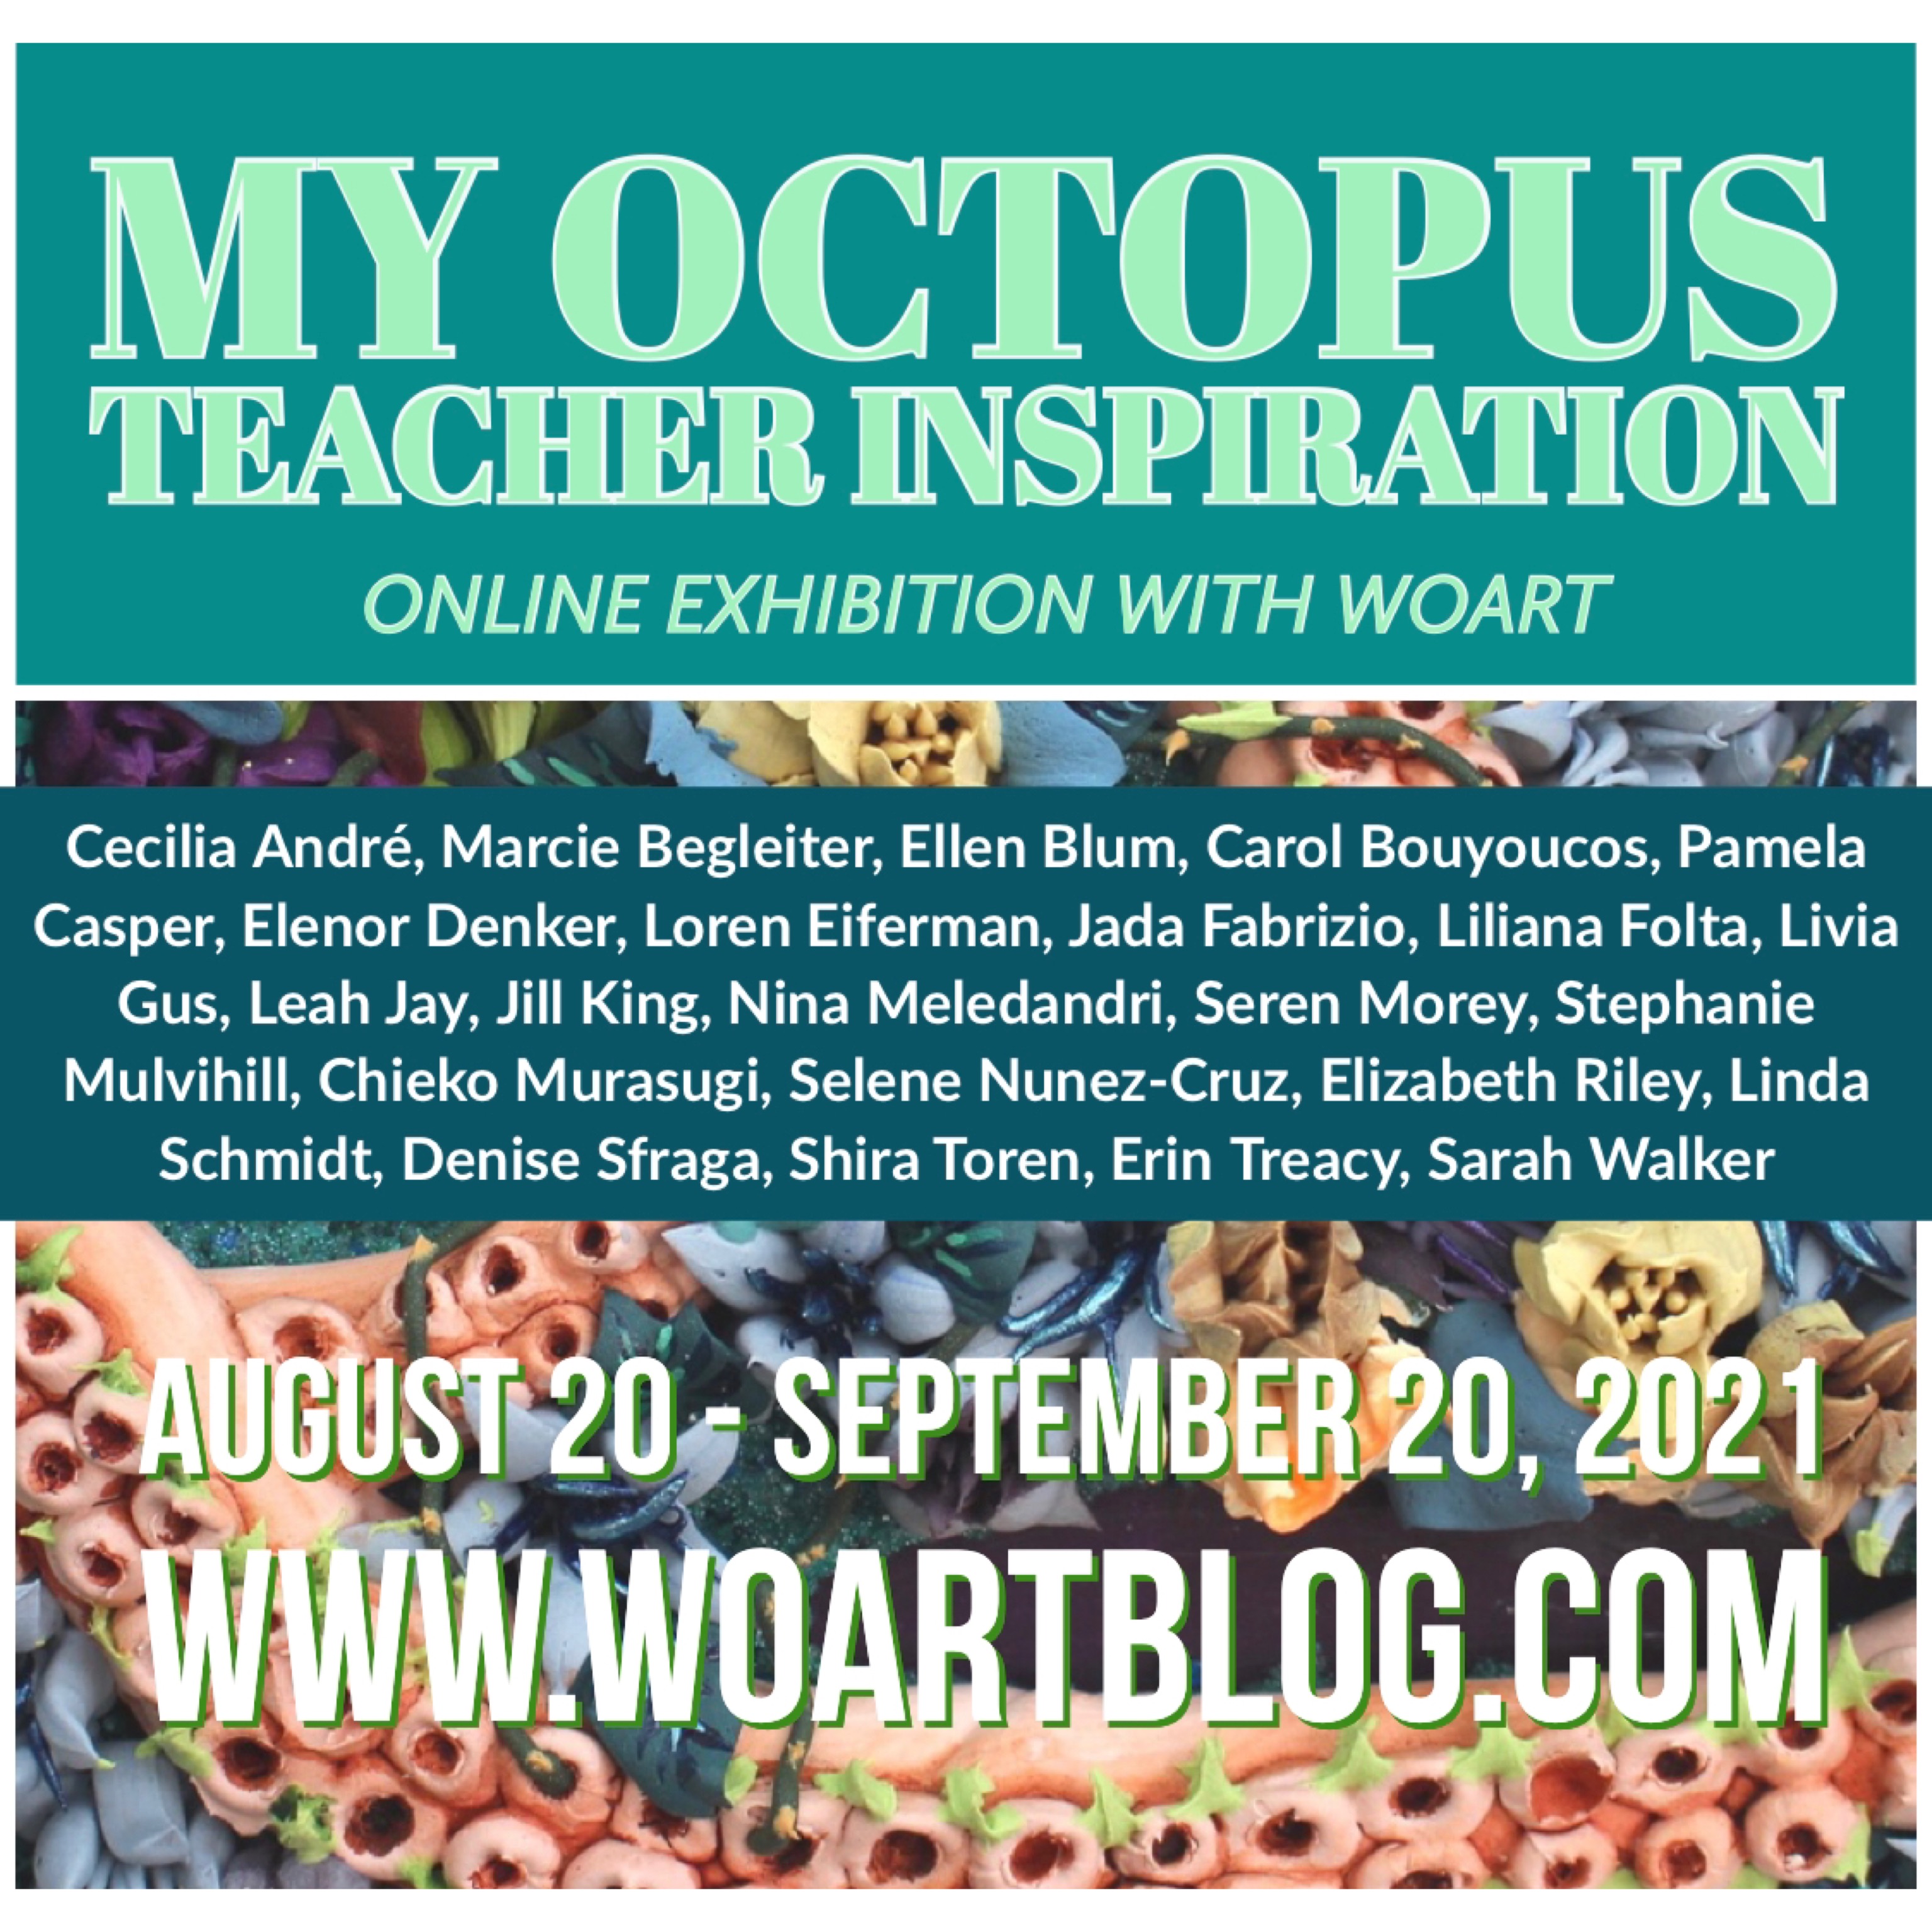 My Octopus Teacher Inspiration - Online Exhibition with Woart